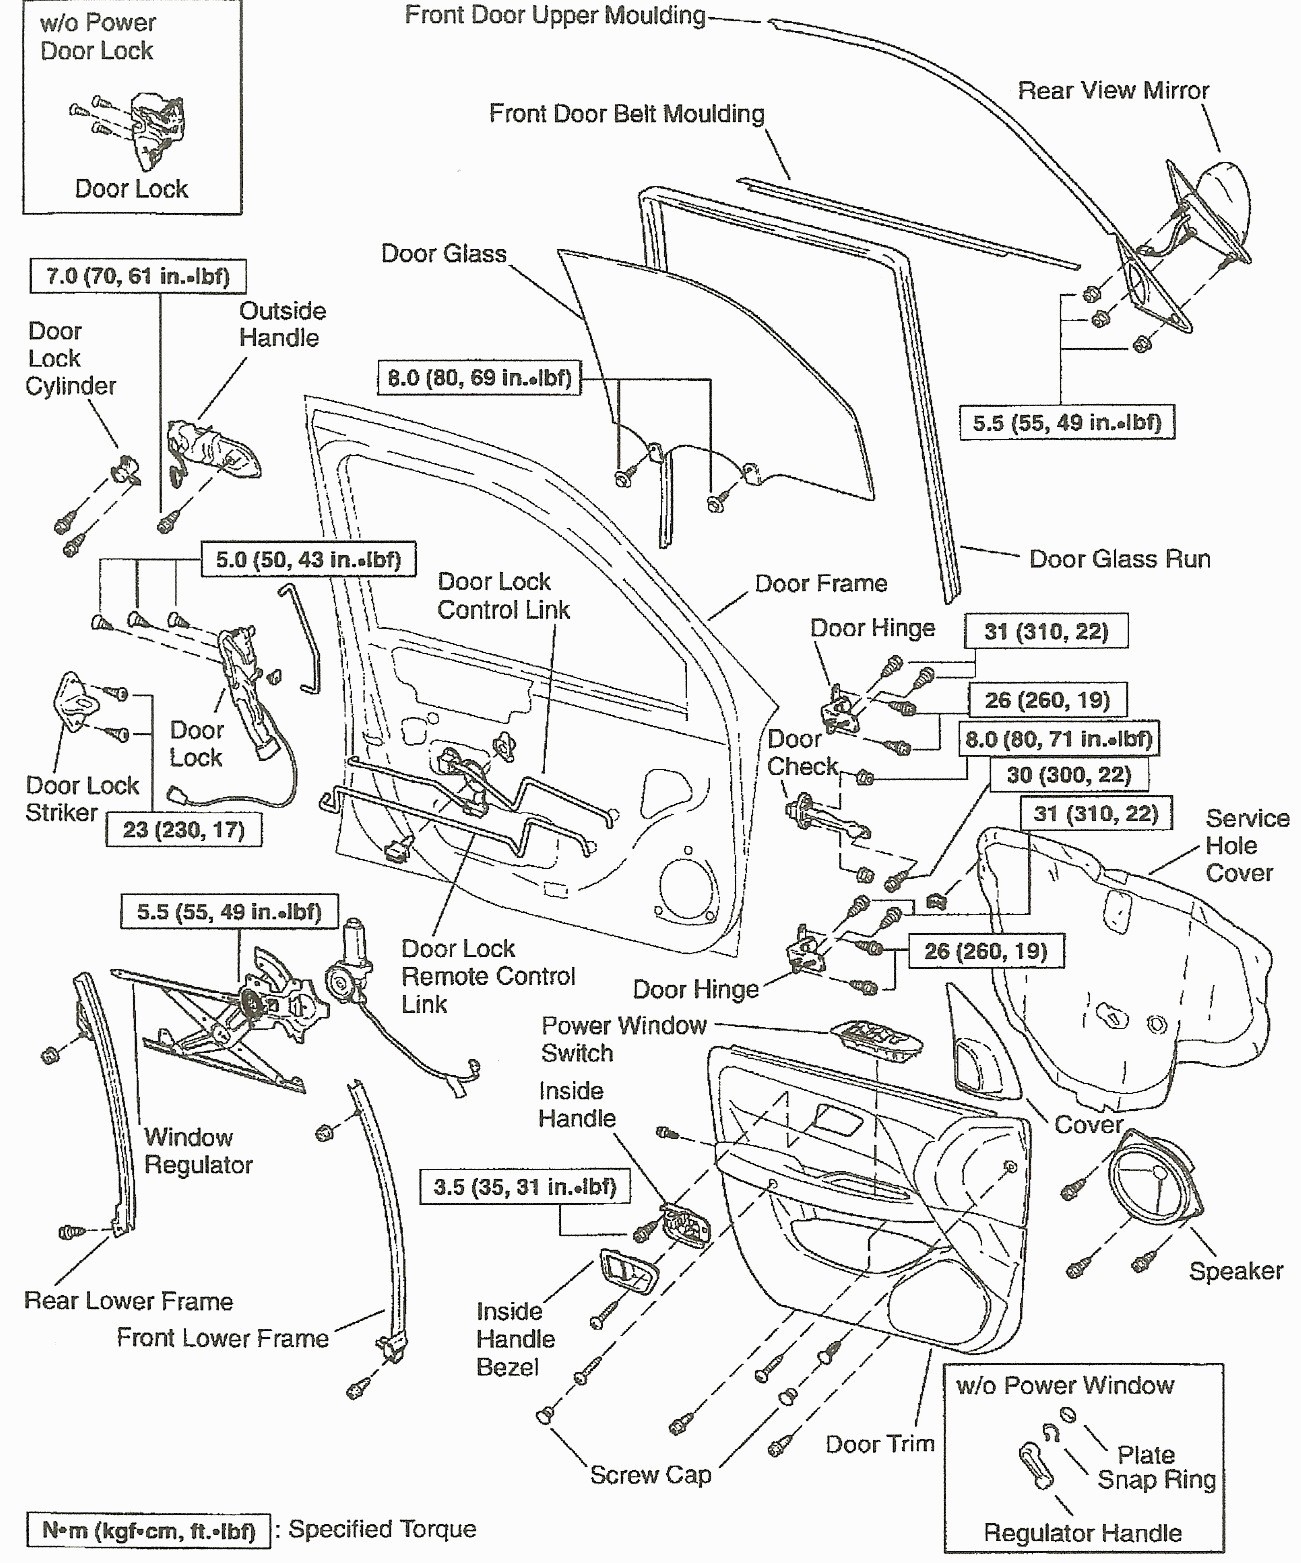 Toyota Camry Engine Diagram toyota Camry Alternator Best 1997 toyota Camry Engine Diagram New Of Toyota Camry Engine Diagram